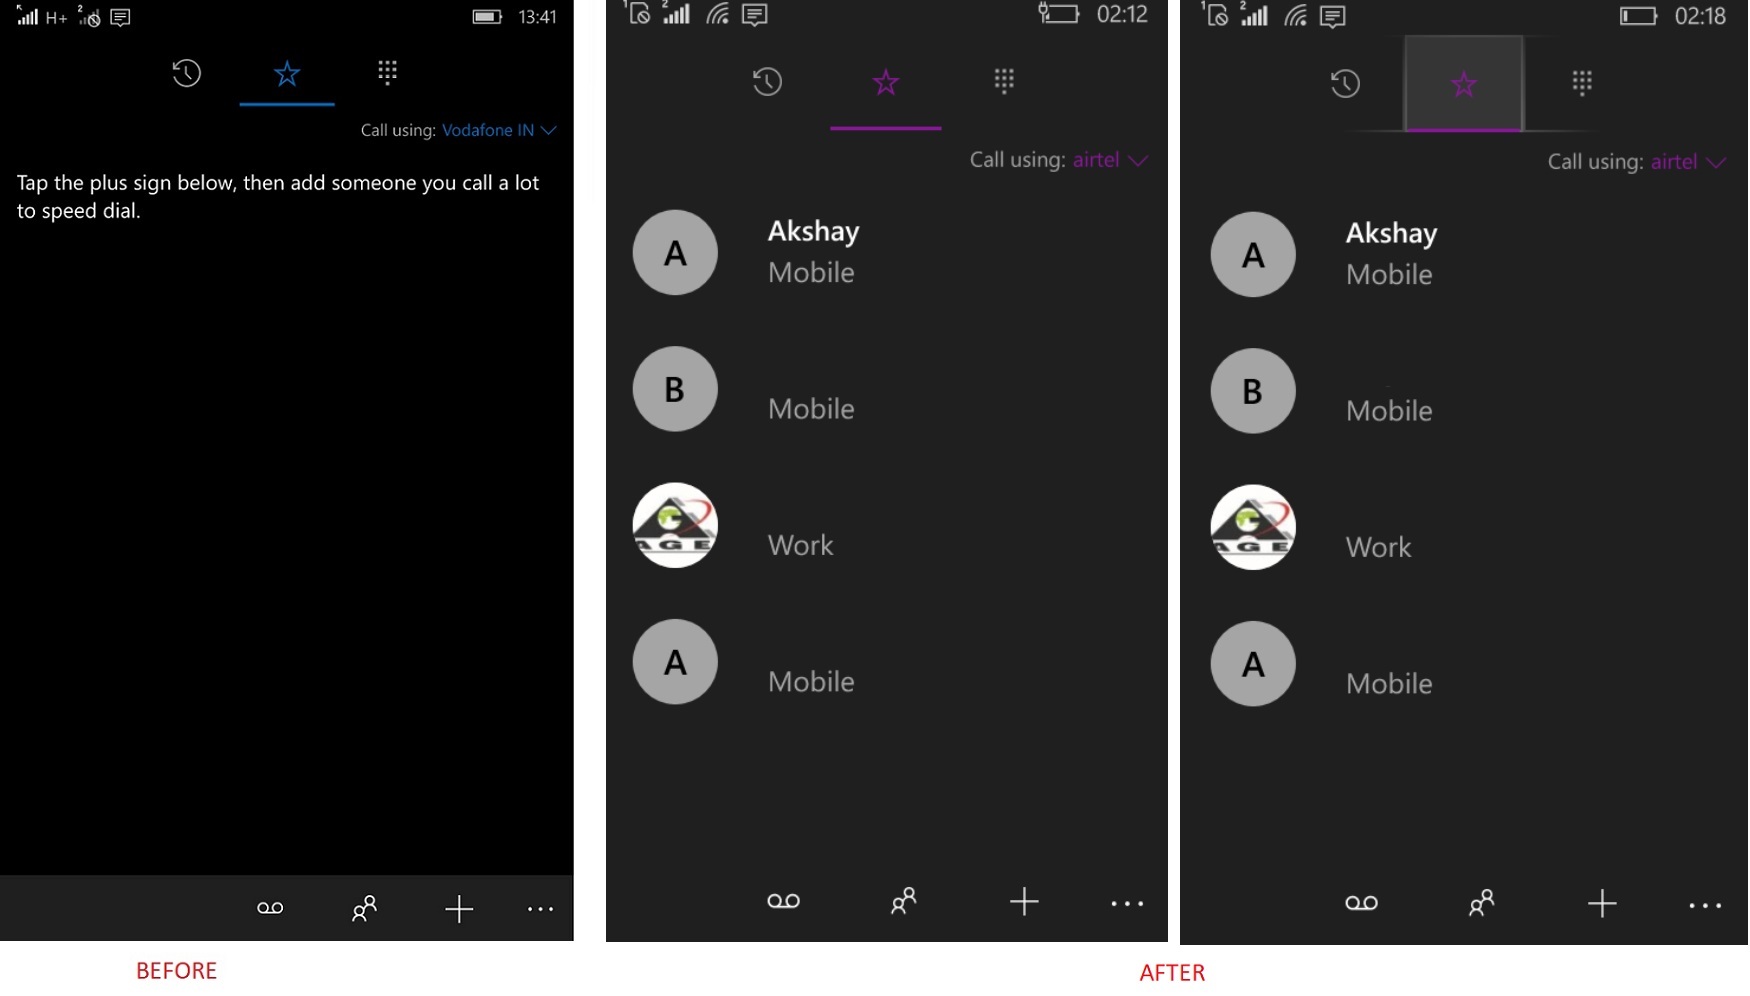 Telefon-App für Windows 10 Mobile bekommt Fluent Design